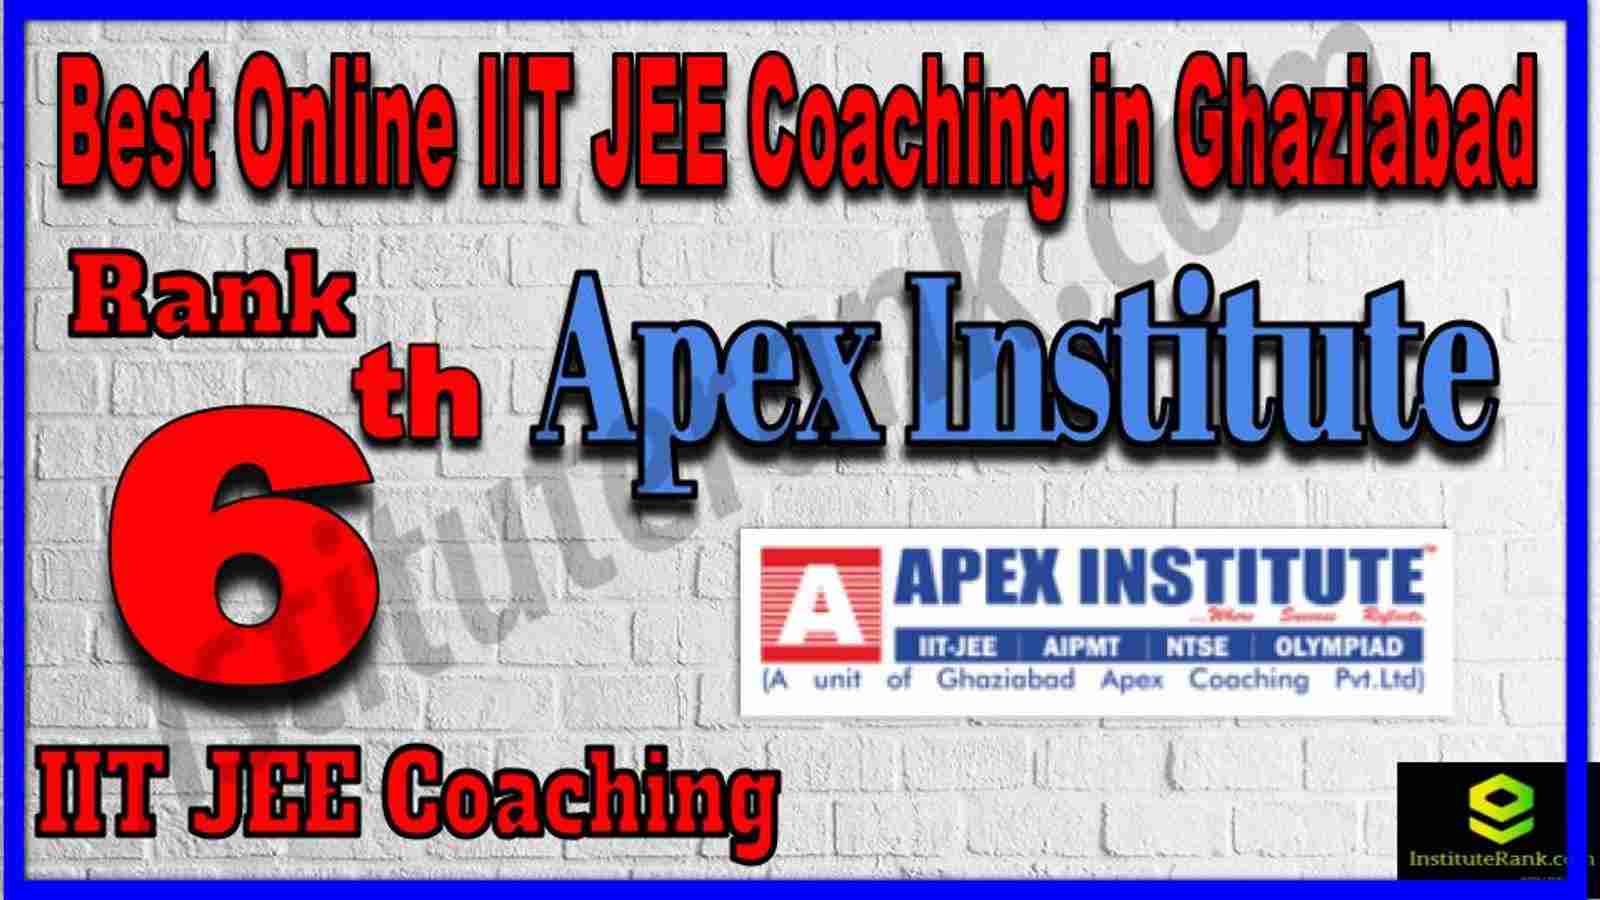 Rank 6th Best Online IIT JEE Coaching in Ghaziabad